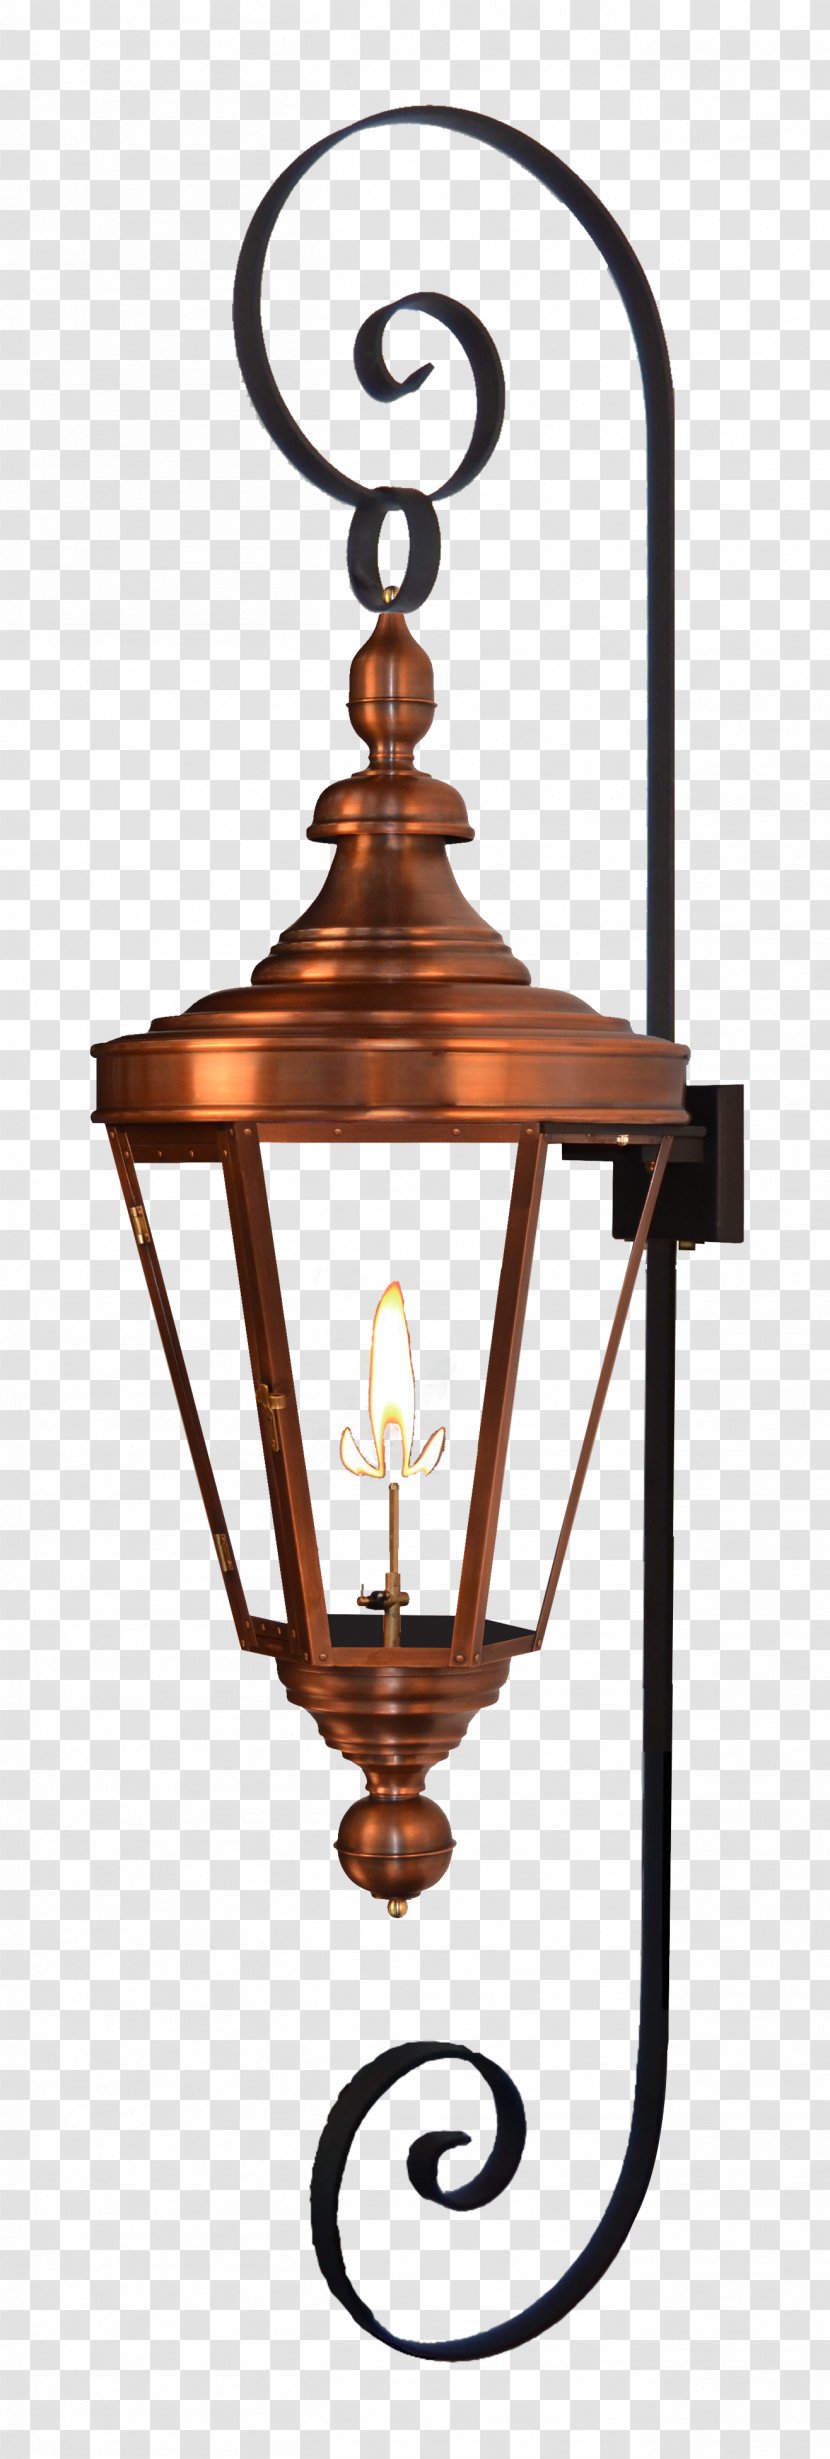 Lantern Gas Lighting Landscape Light Fixture - Electrical Filament Transparent PNG